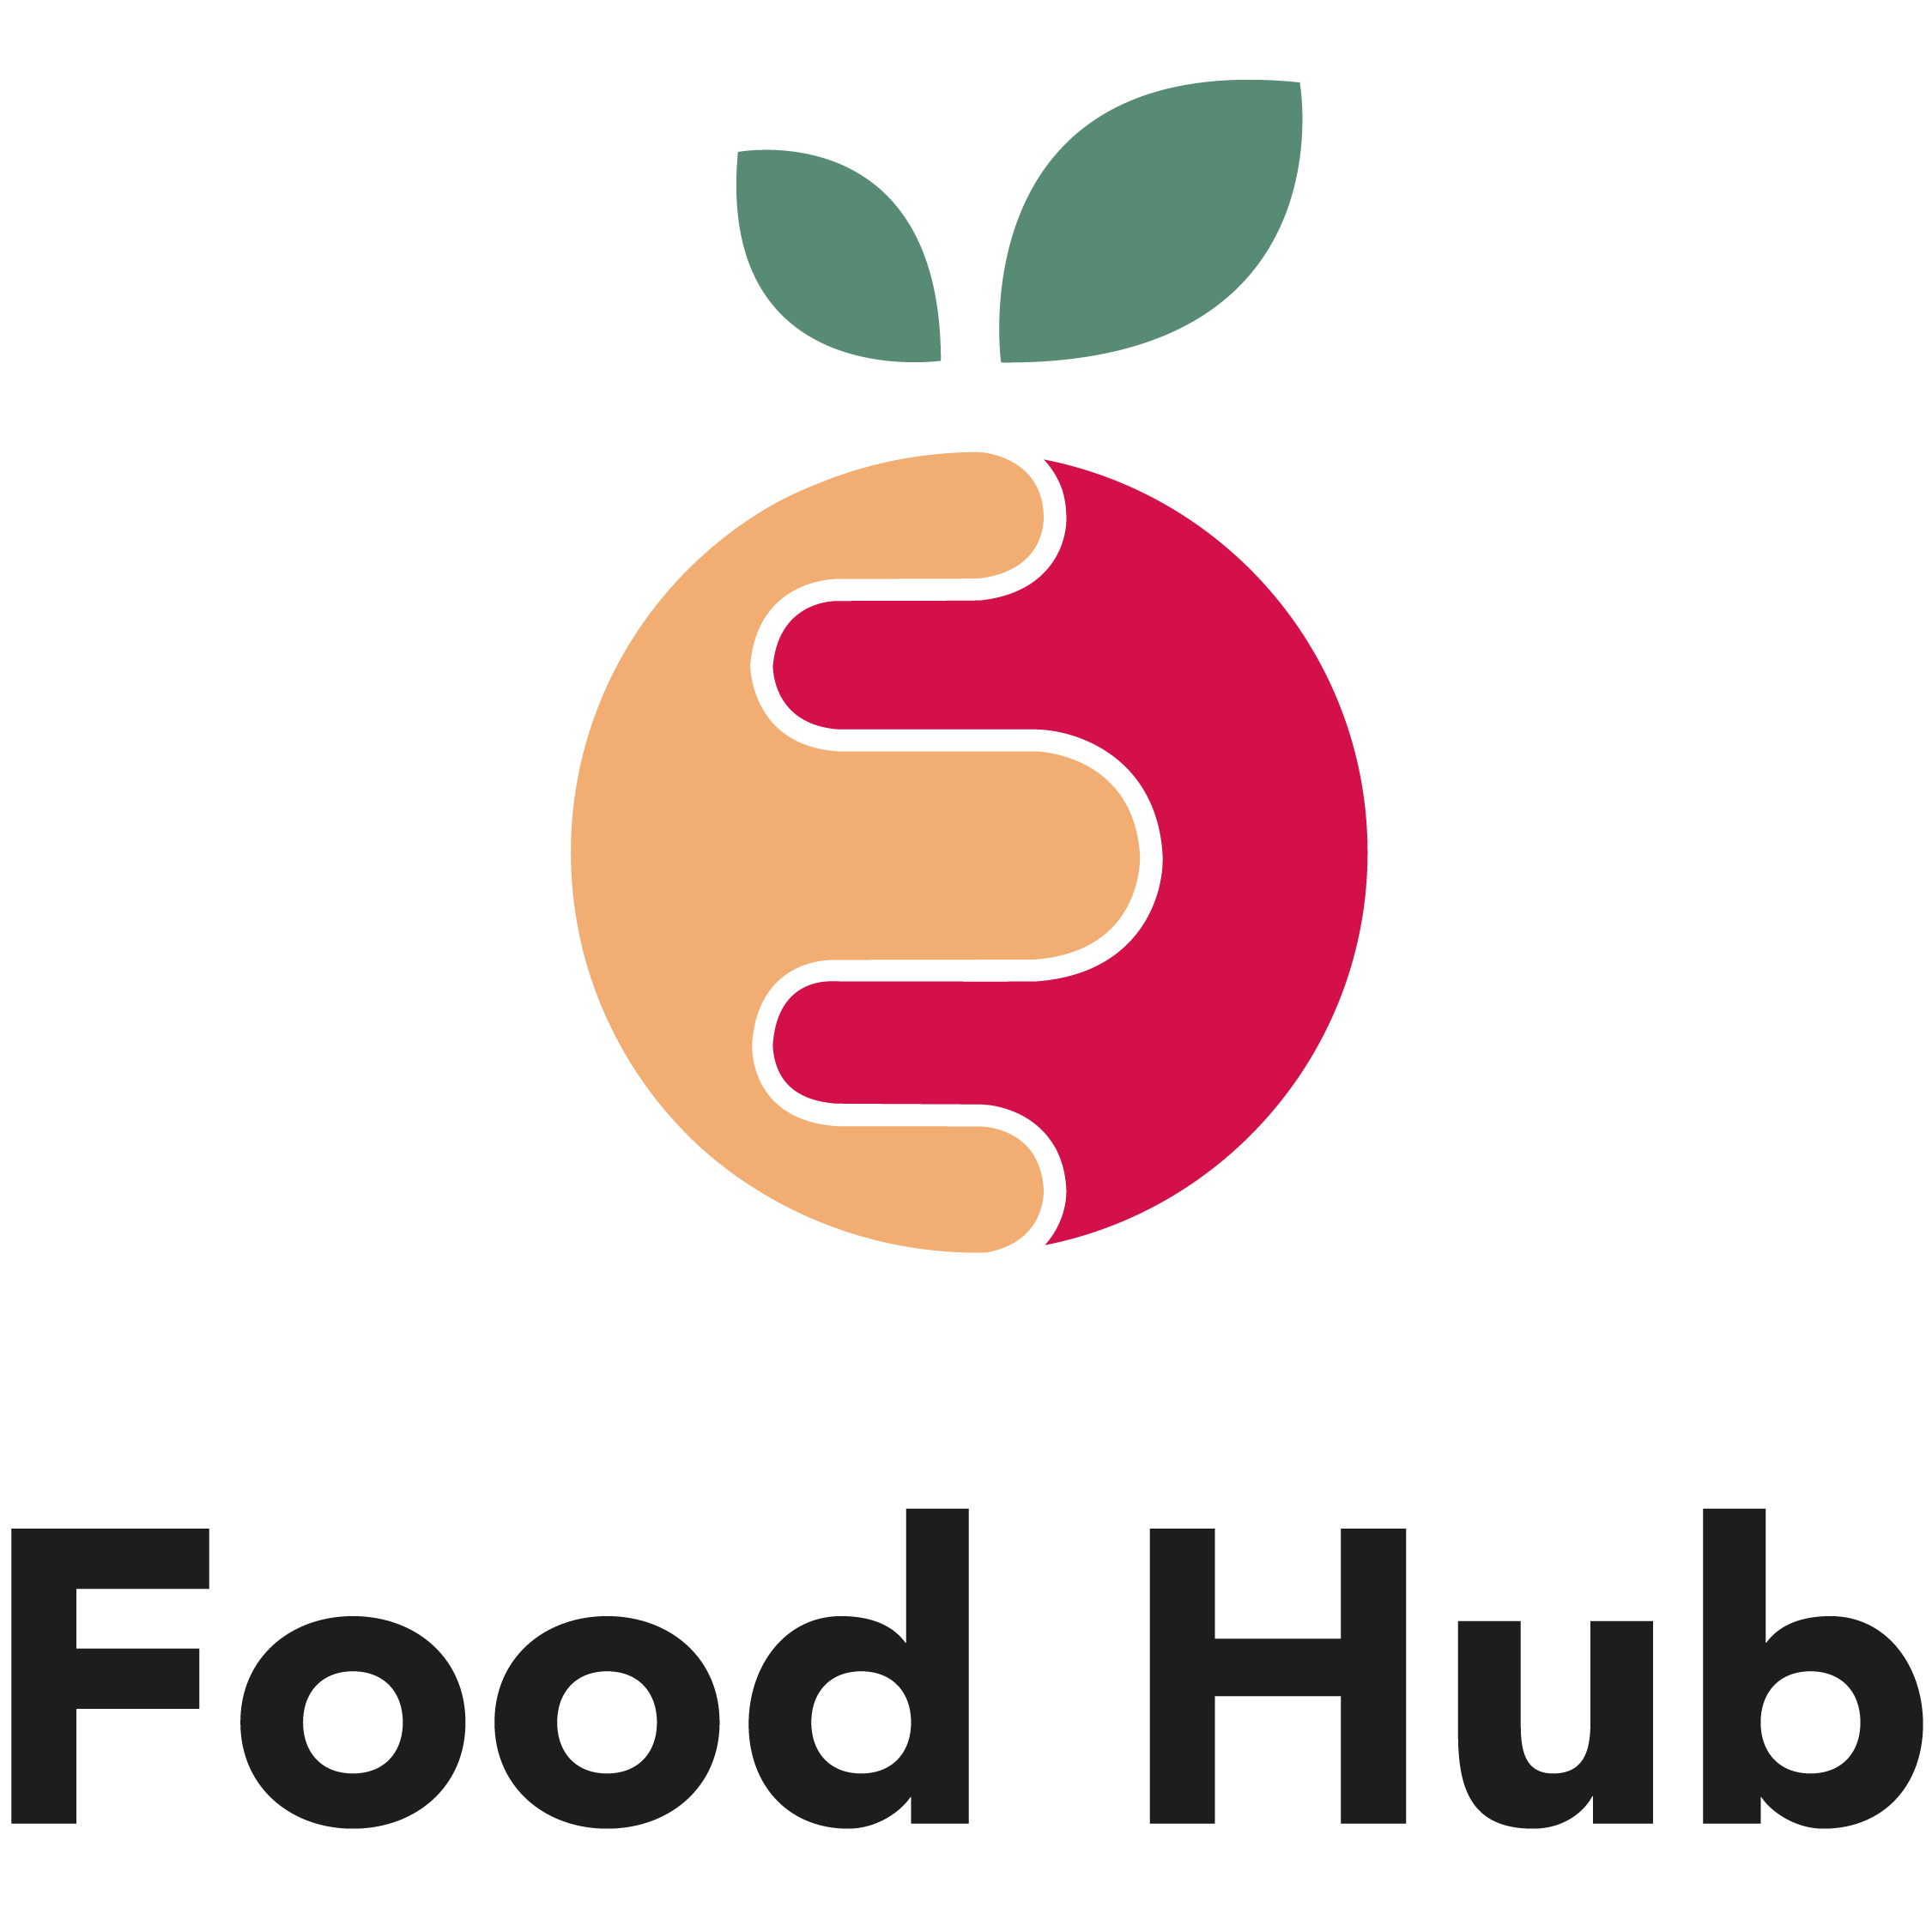 Food Hub logo